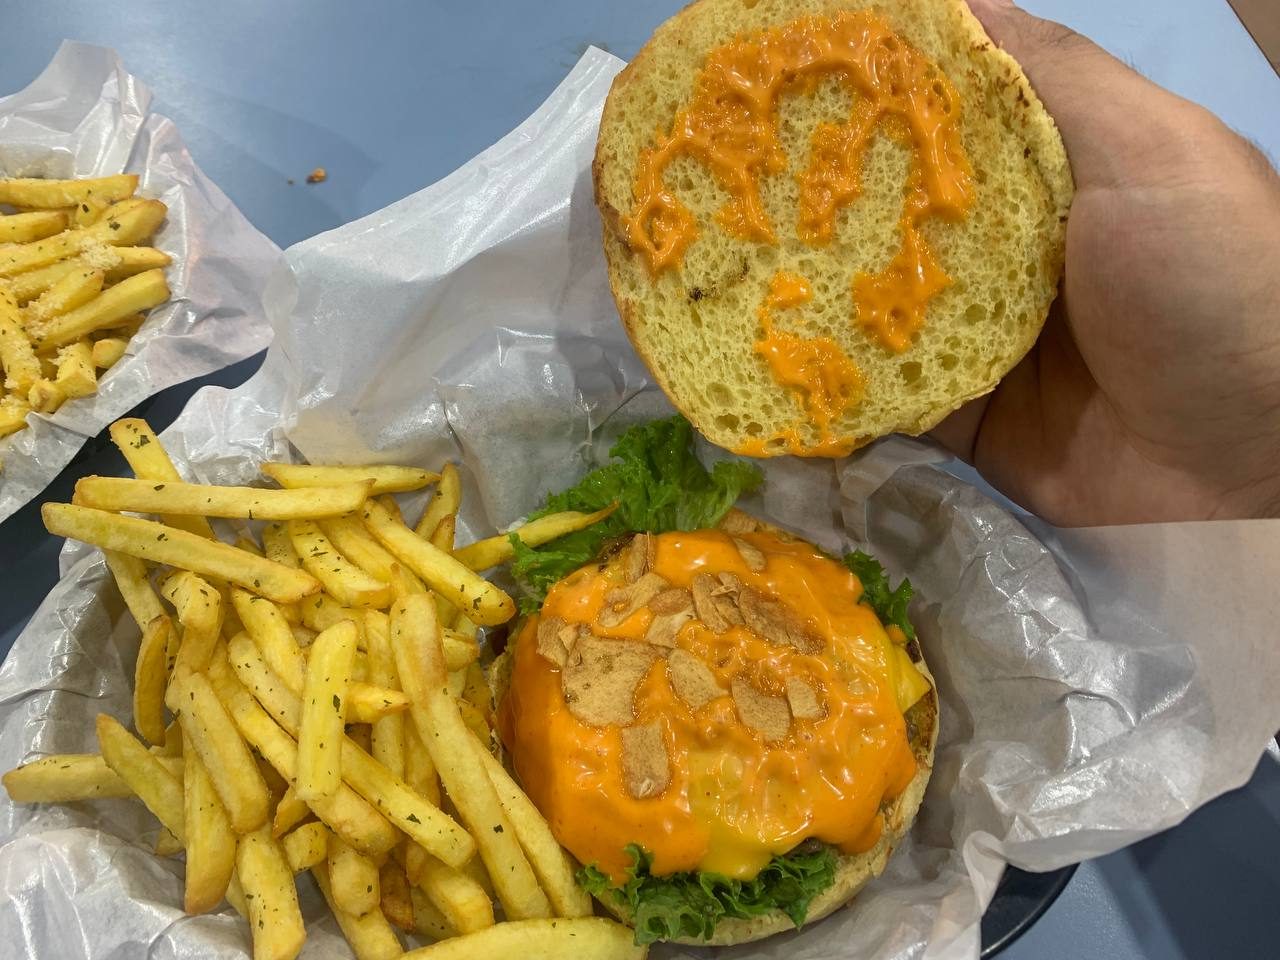 The Burger Coy - The Cheeseburger